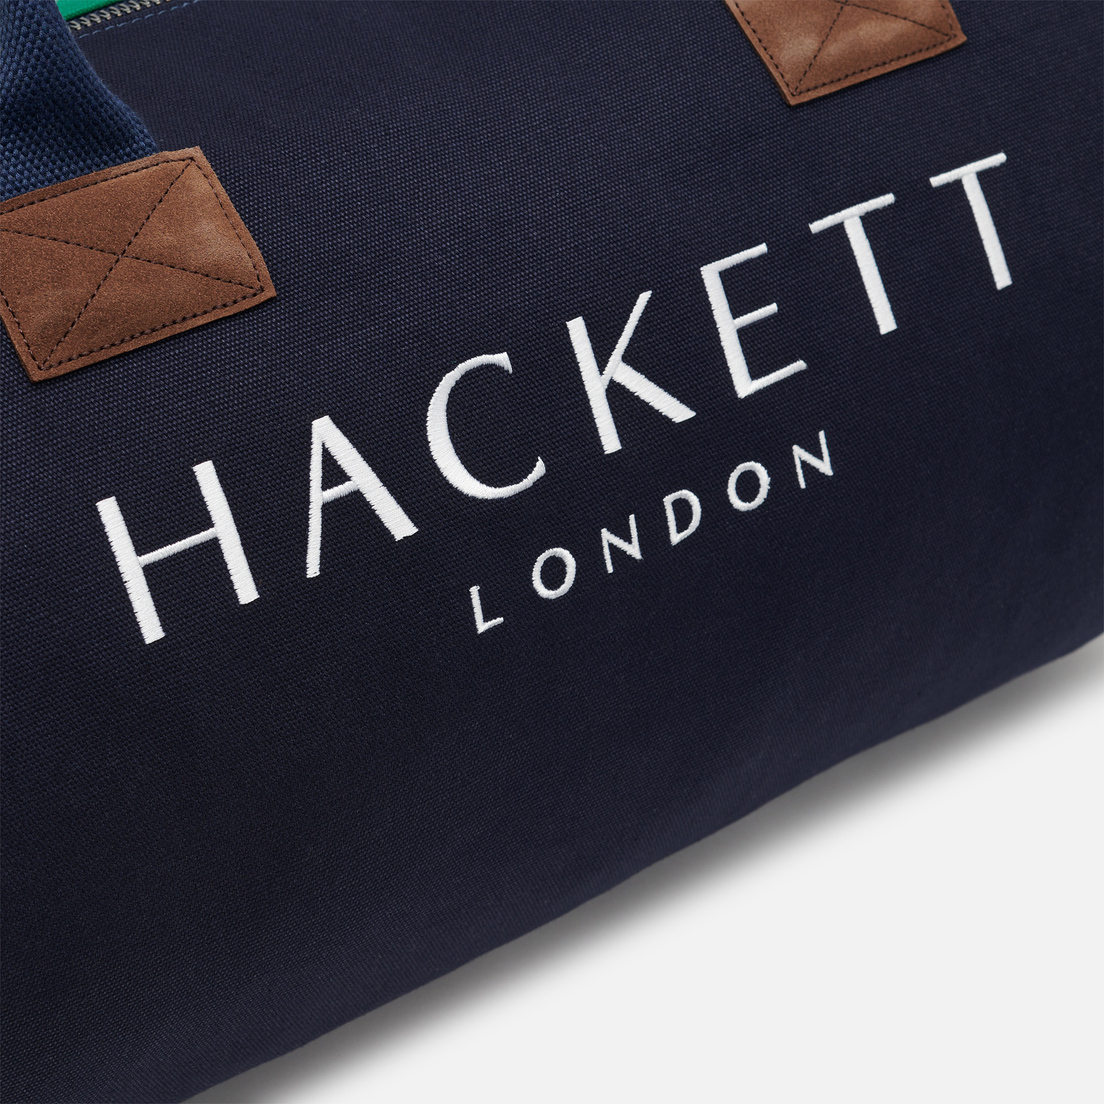 Hackett Дорожная сумка Heritage Multi Kit